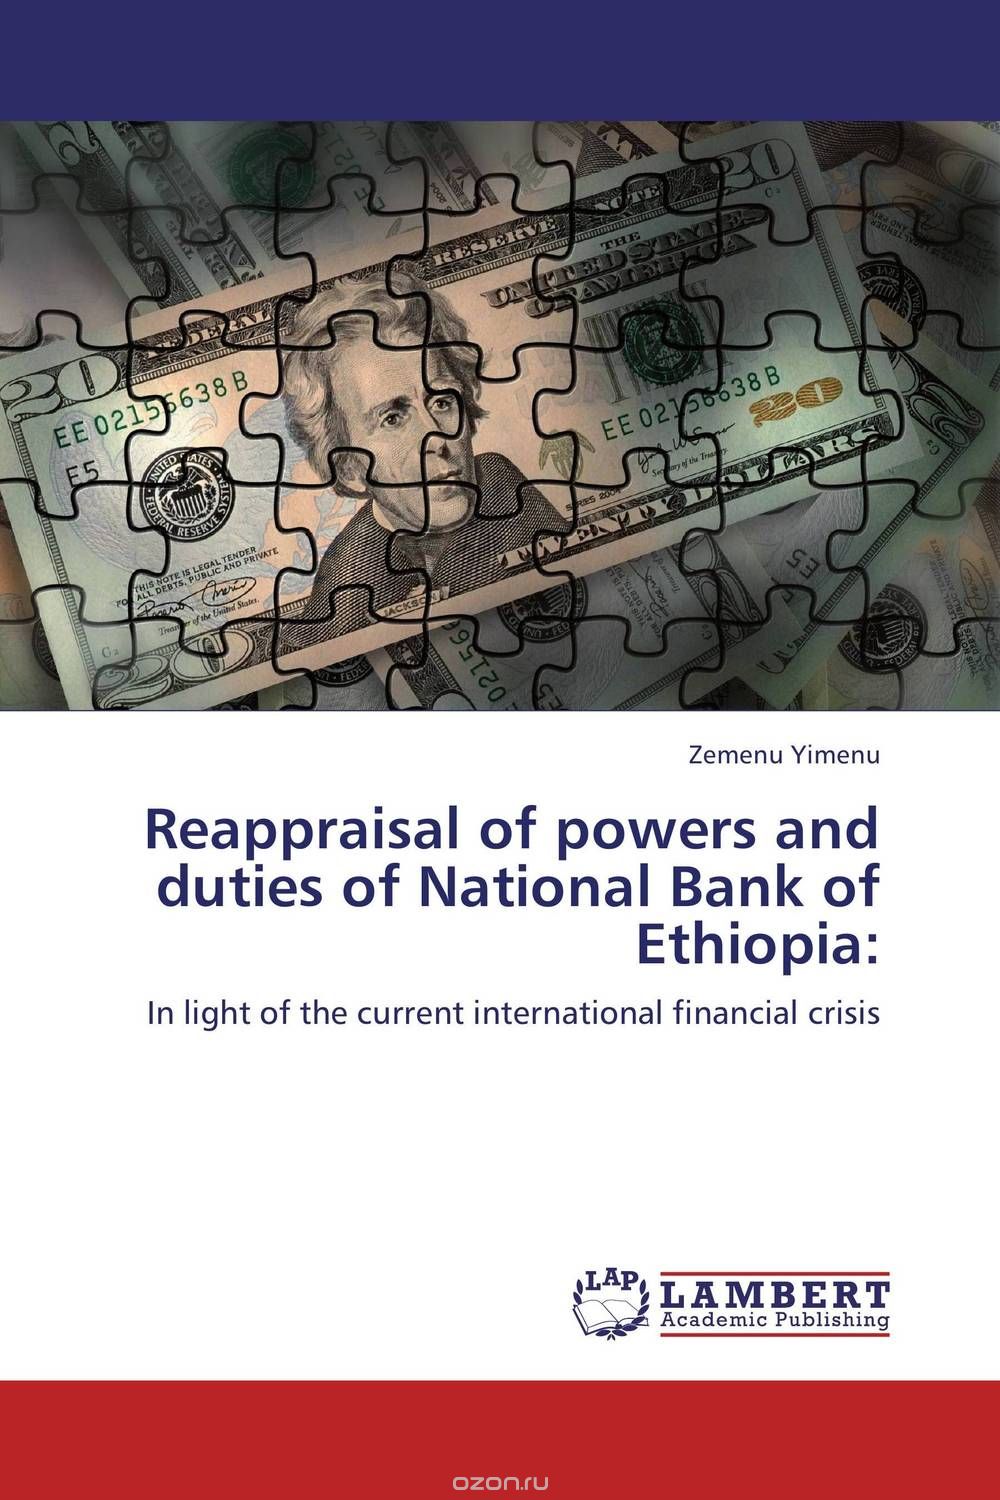 Скачать книгу "Reappraisal of powers and duties of National Bank of Ethiopia:"